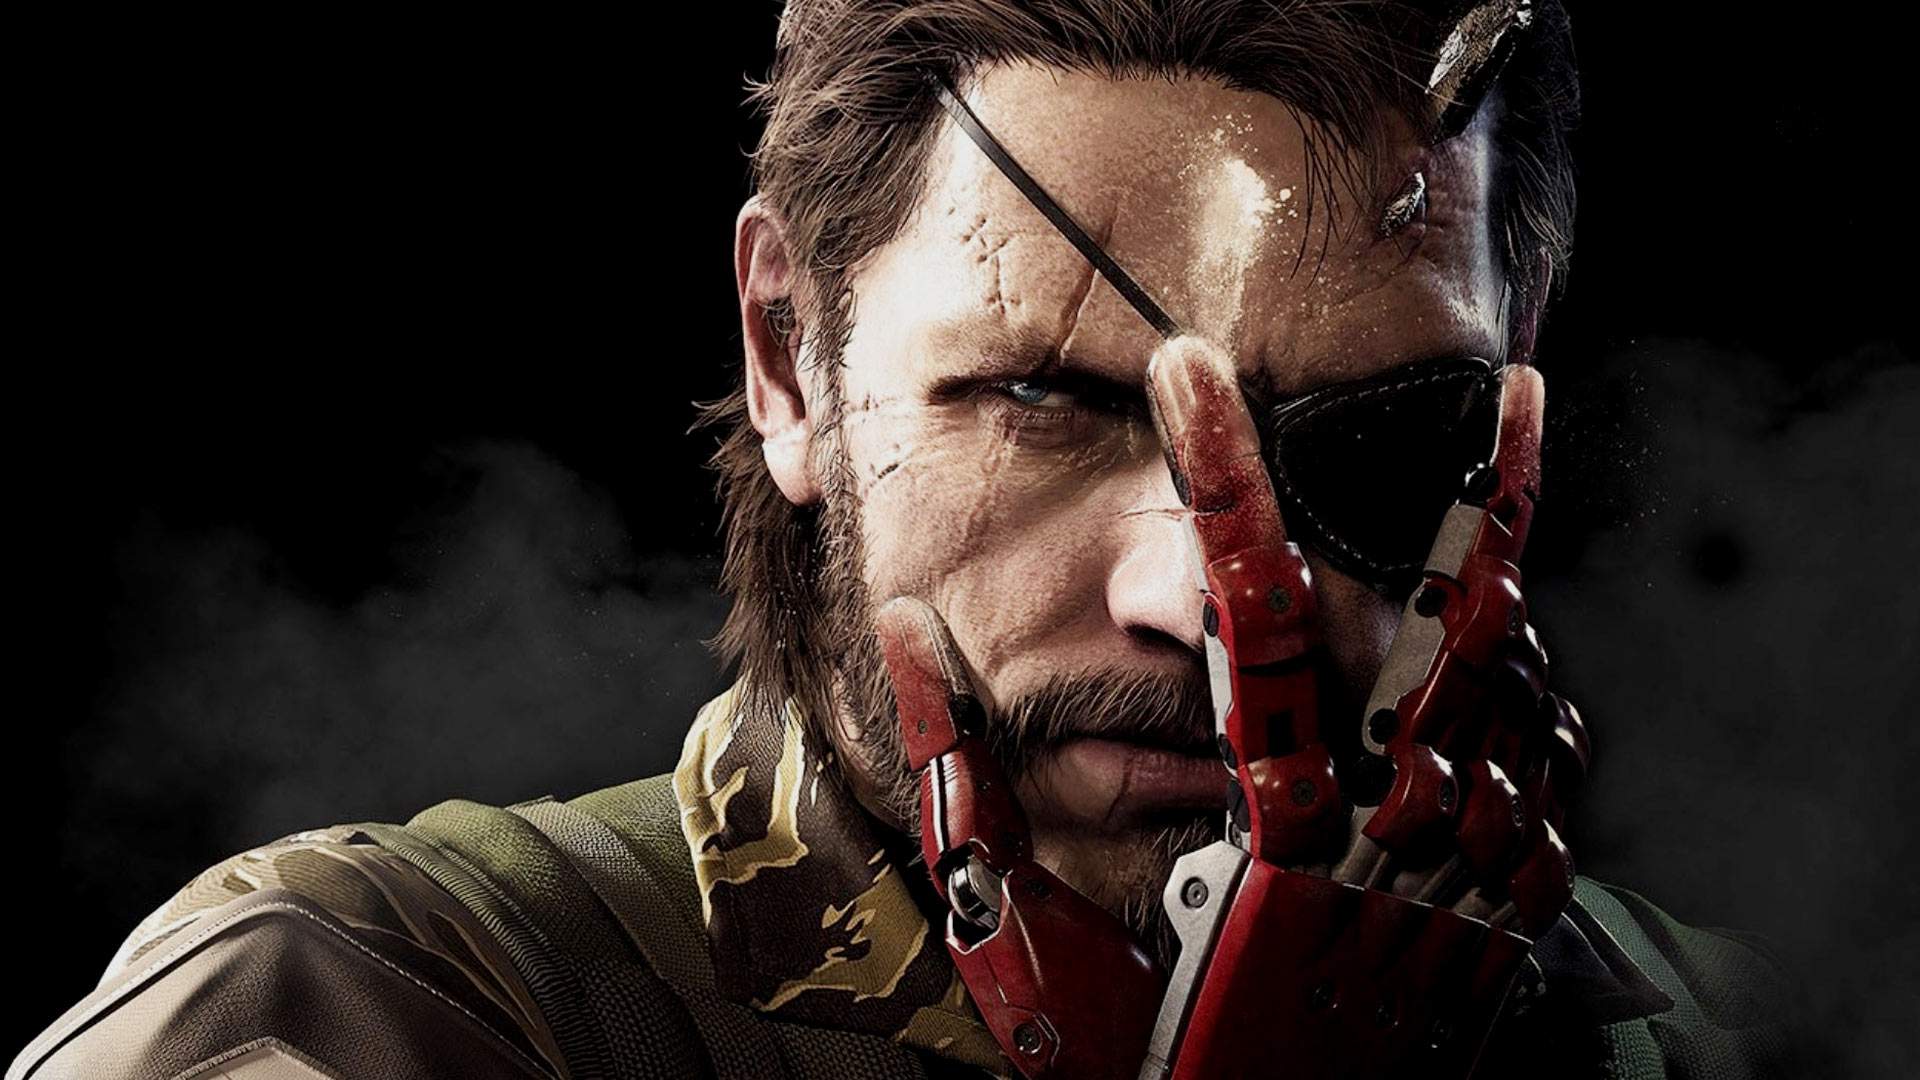 Big Boss Bionic Arm Metal Gear Solid V The Phantom Pain Wallpaper HD